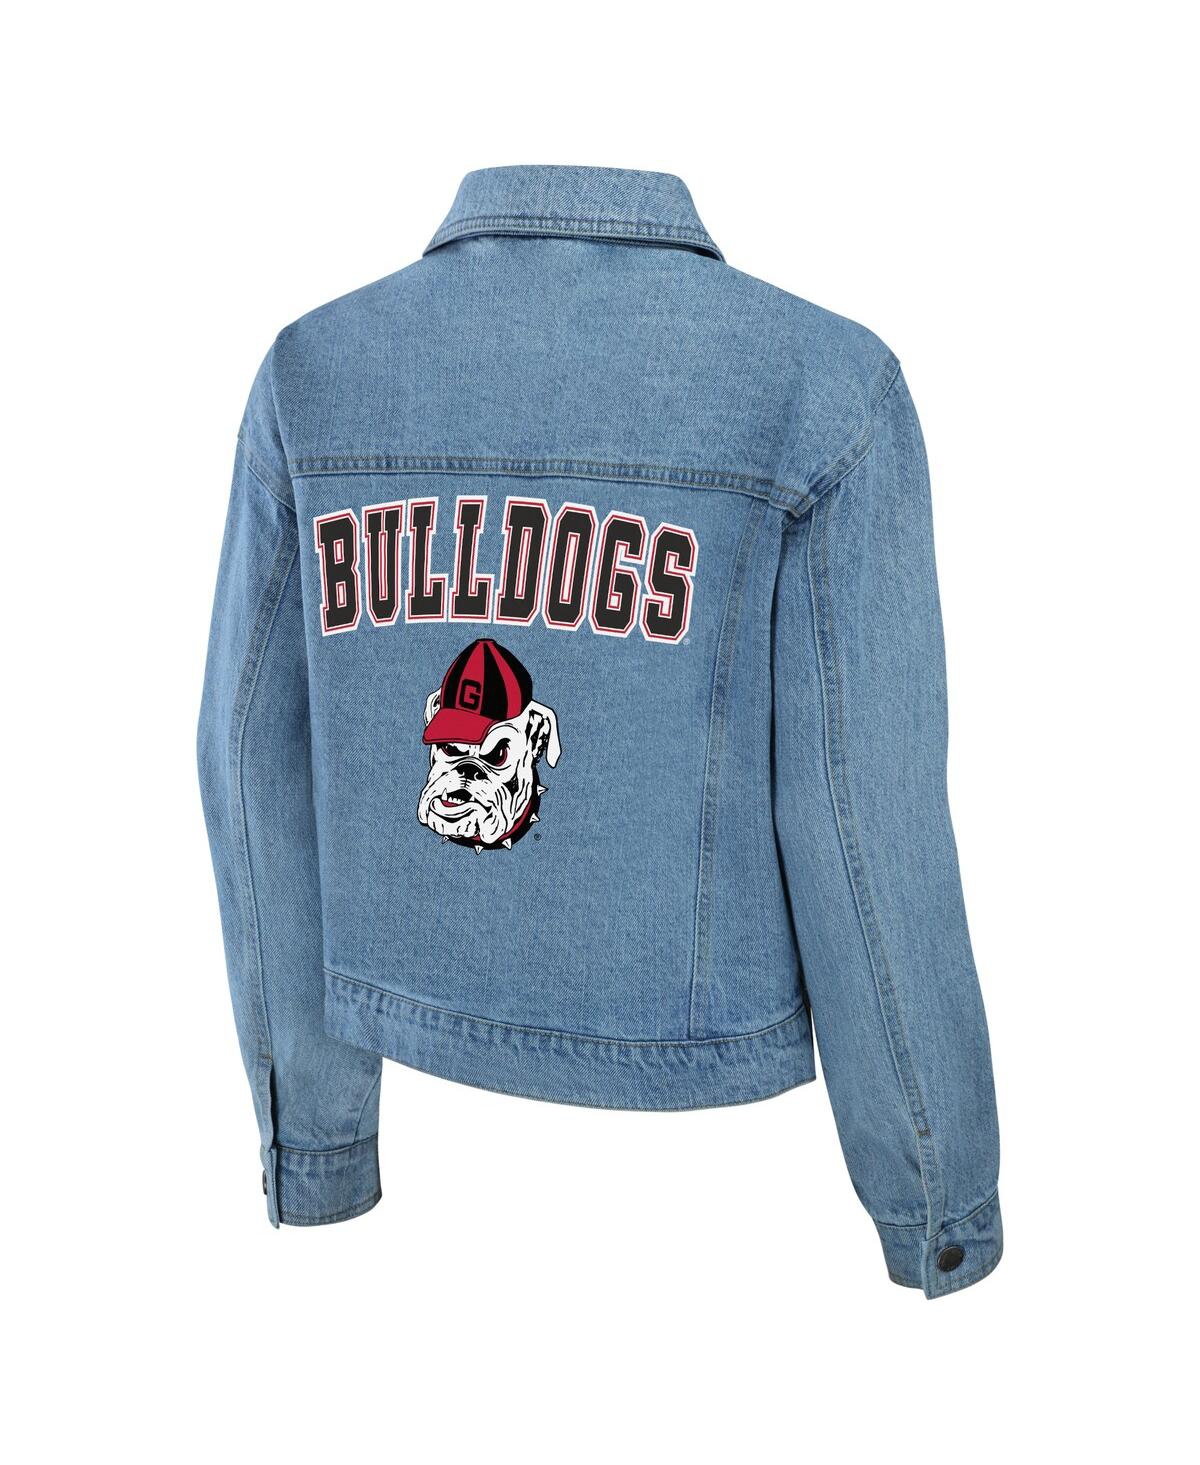 Shop Wear By Erin Andrews Women's  Georgia Bulldogs Button-up Denim Jacket